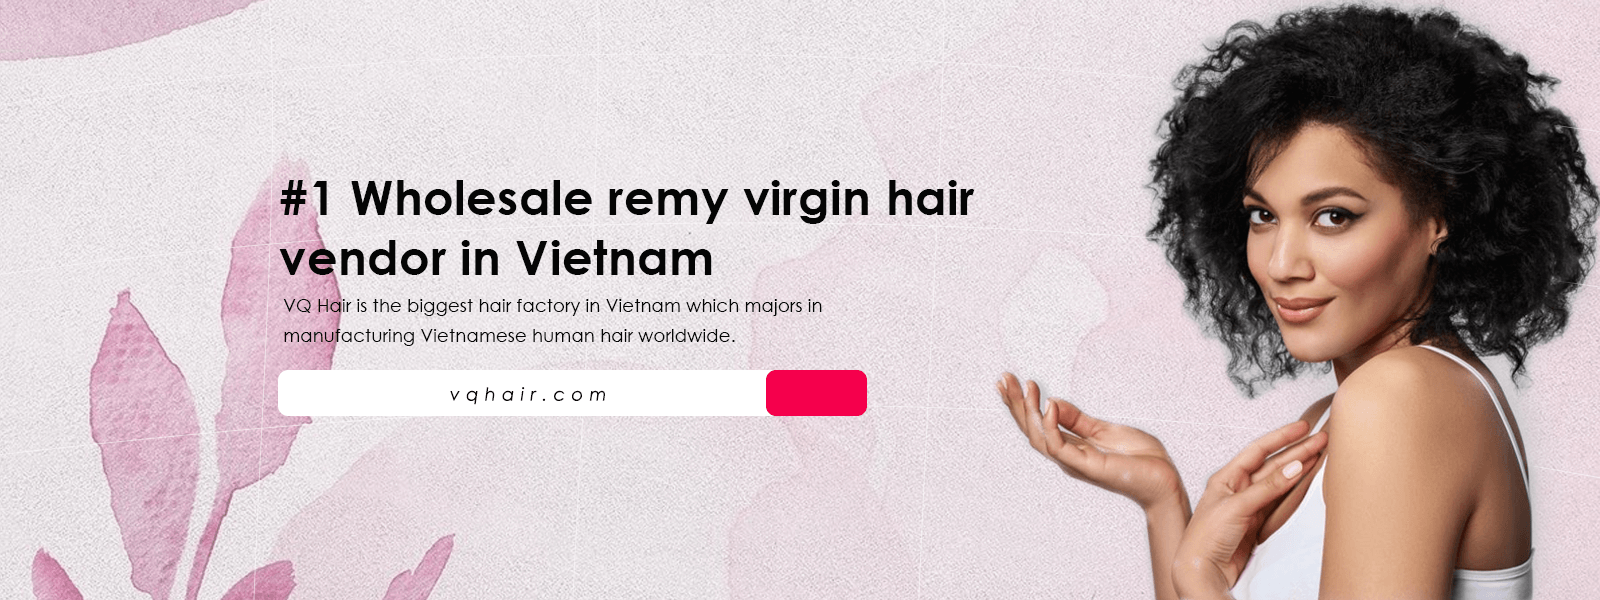 VQ Hair Best wholesale virgin hair vendor